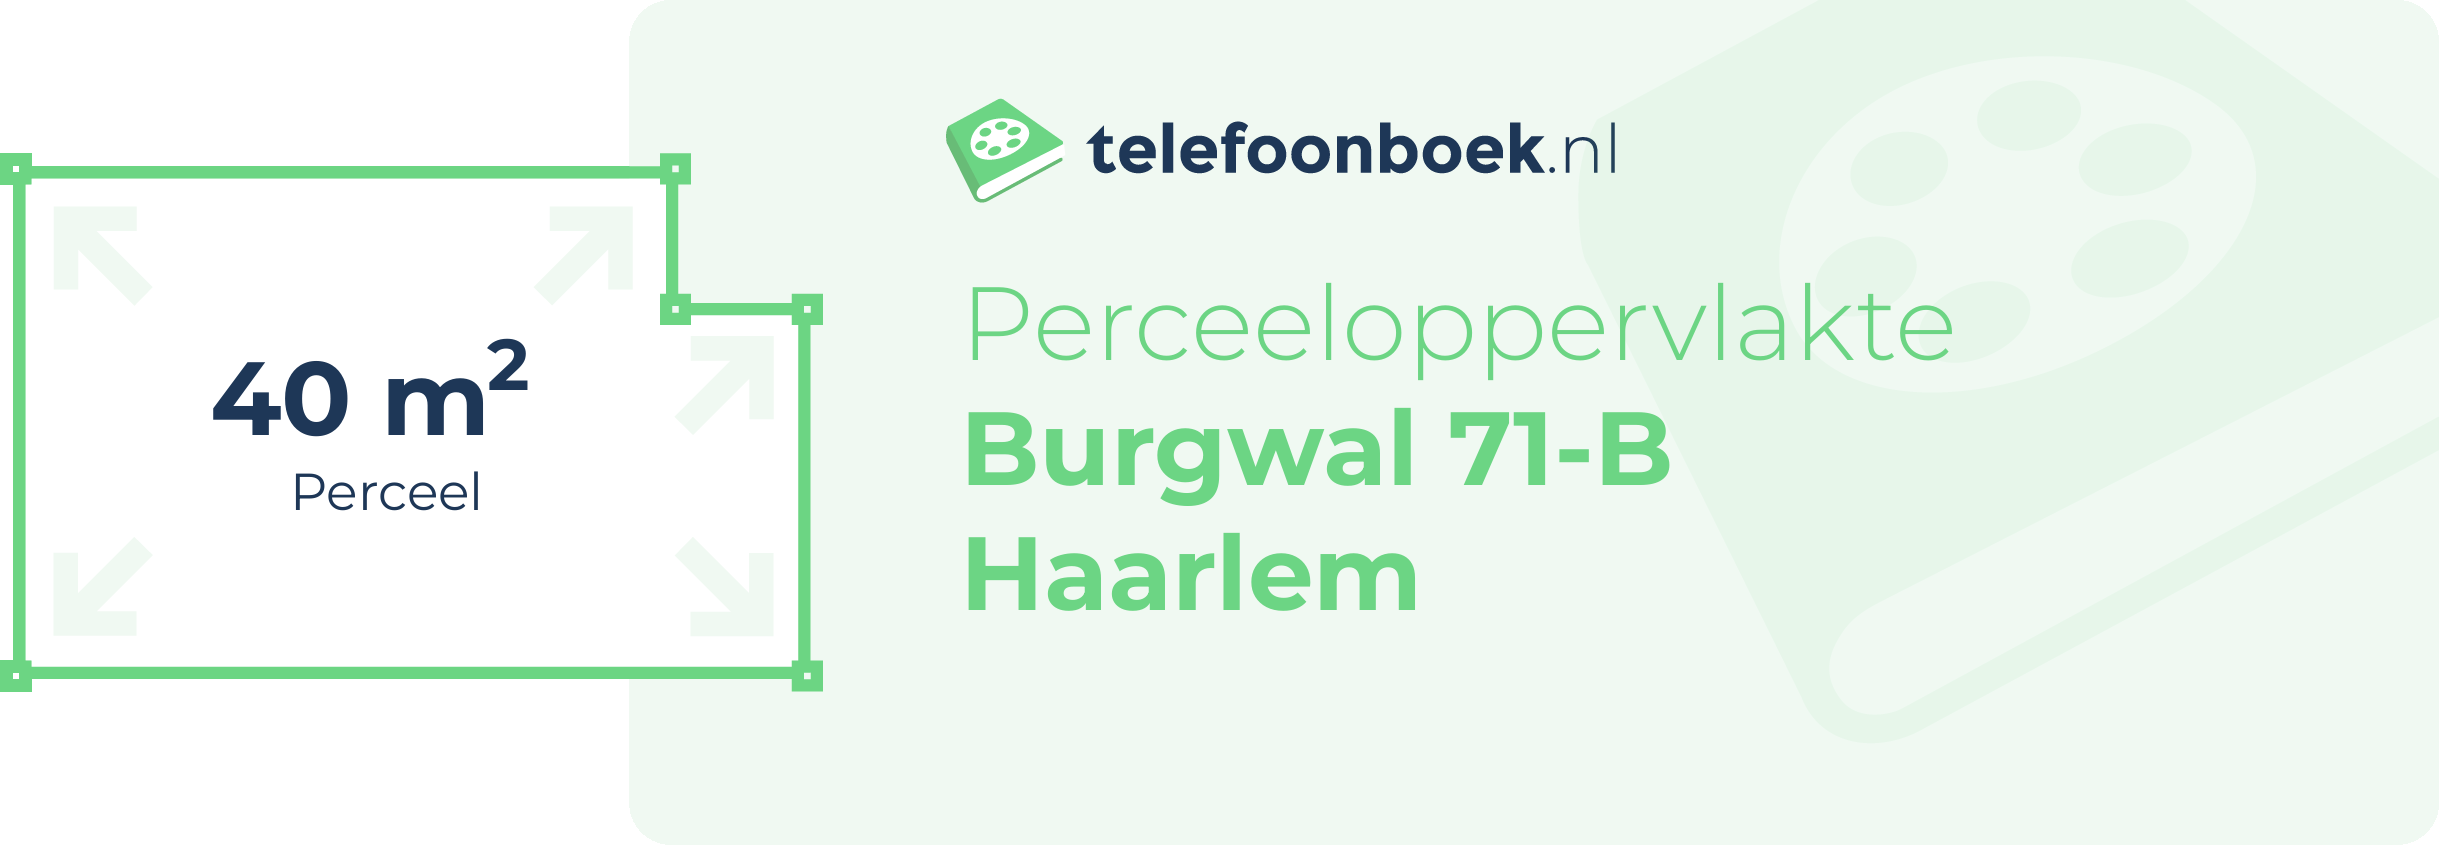 Perceeloppervlakte Burgwal 71-B Haarlem